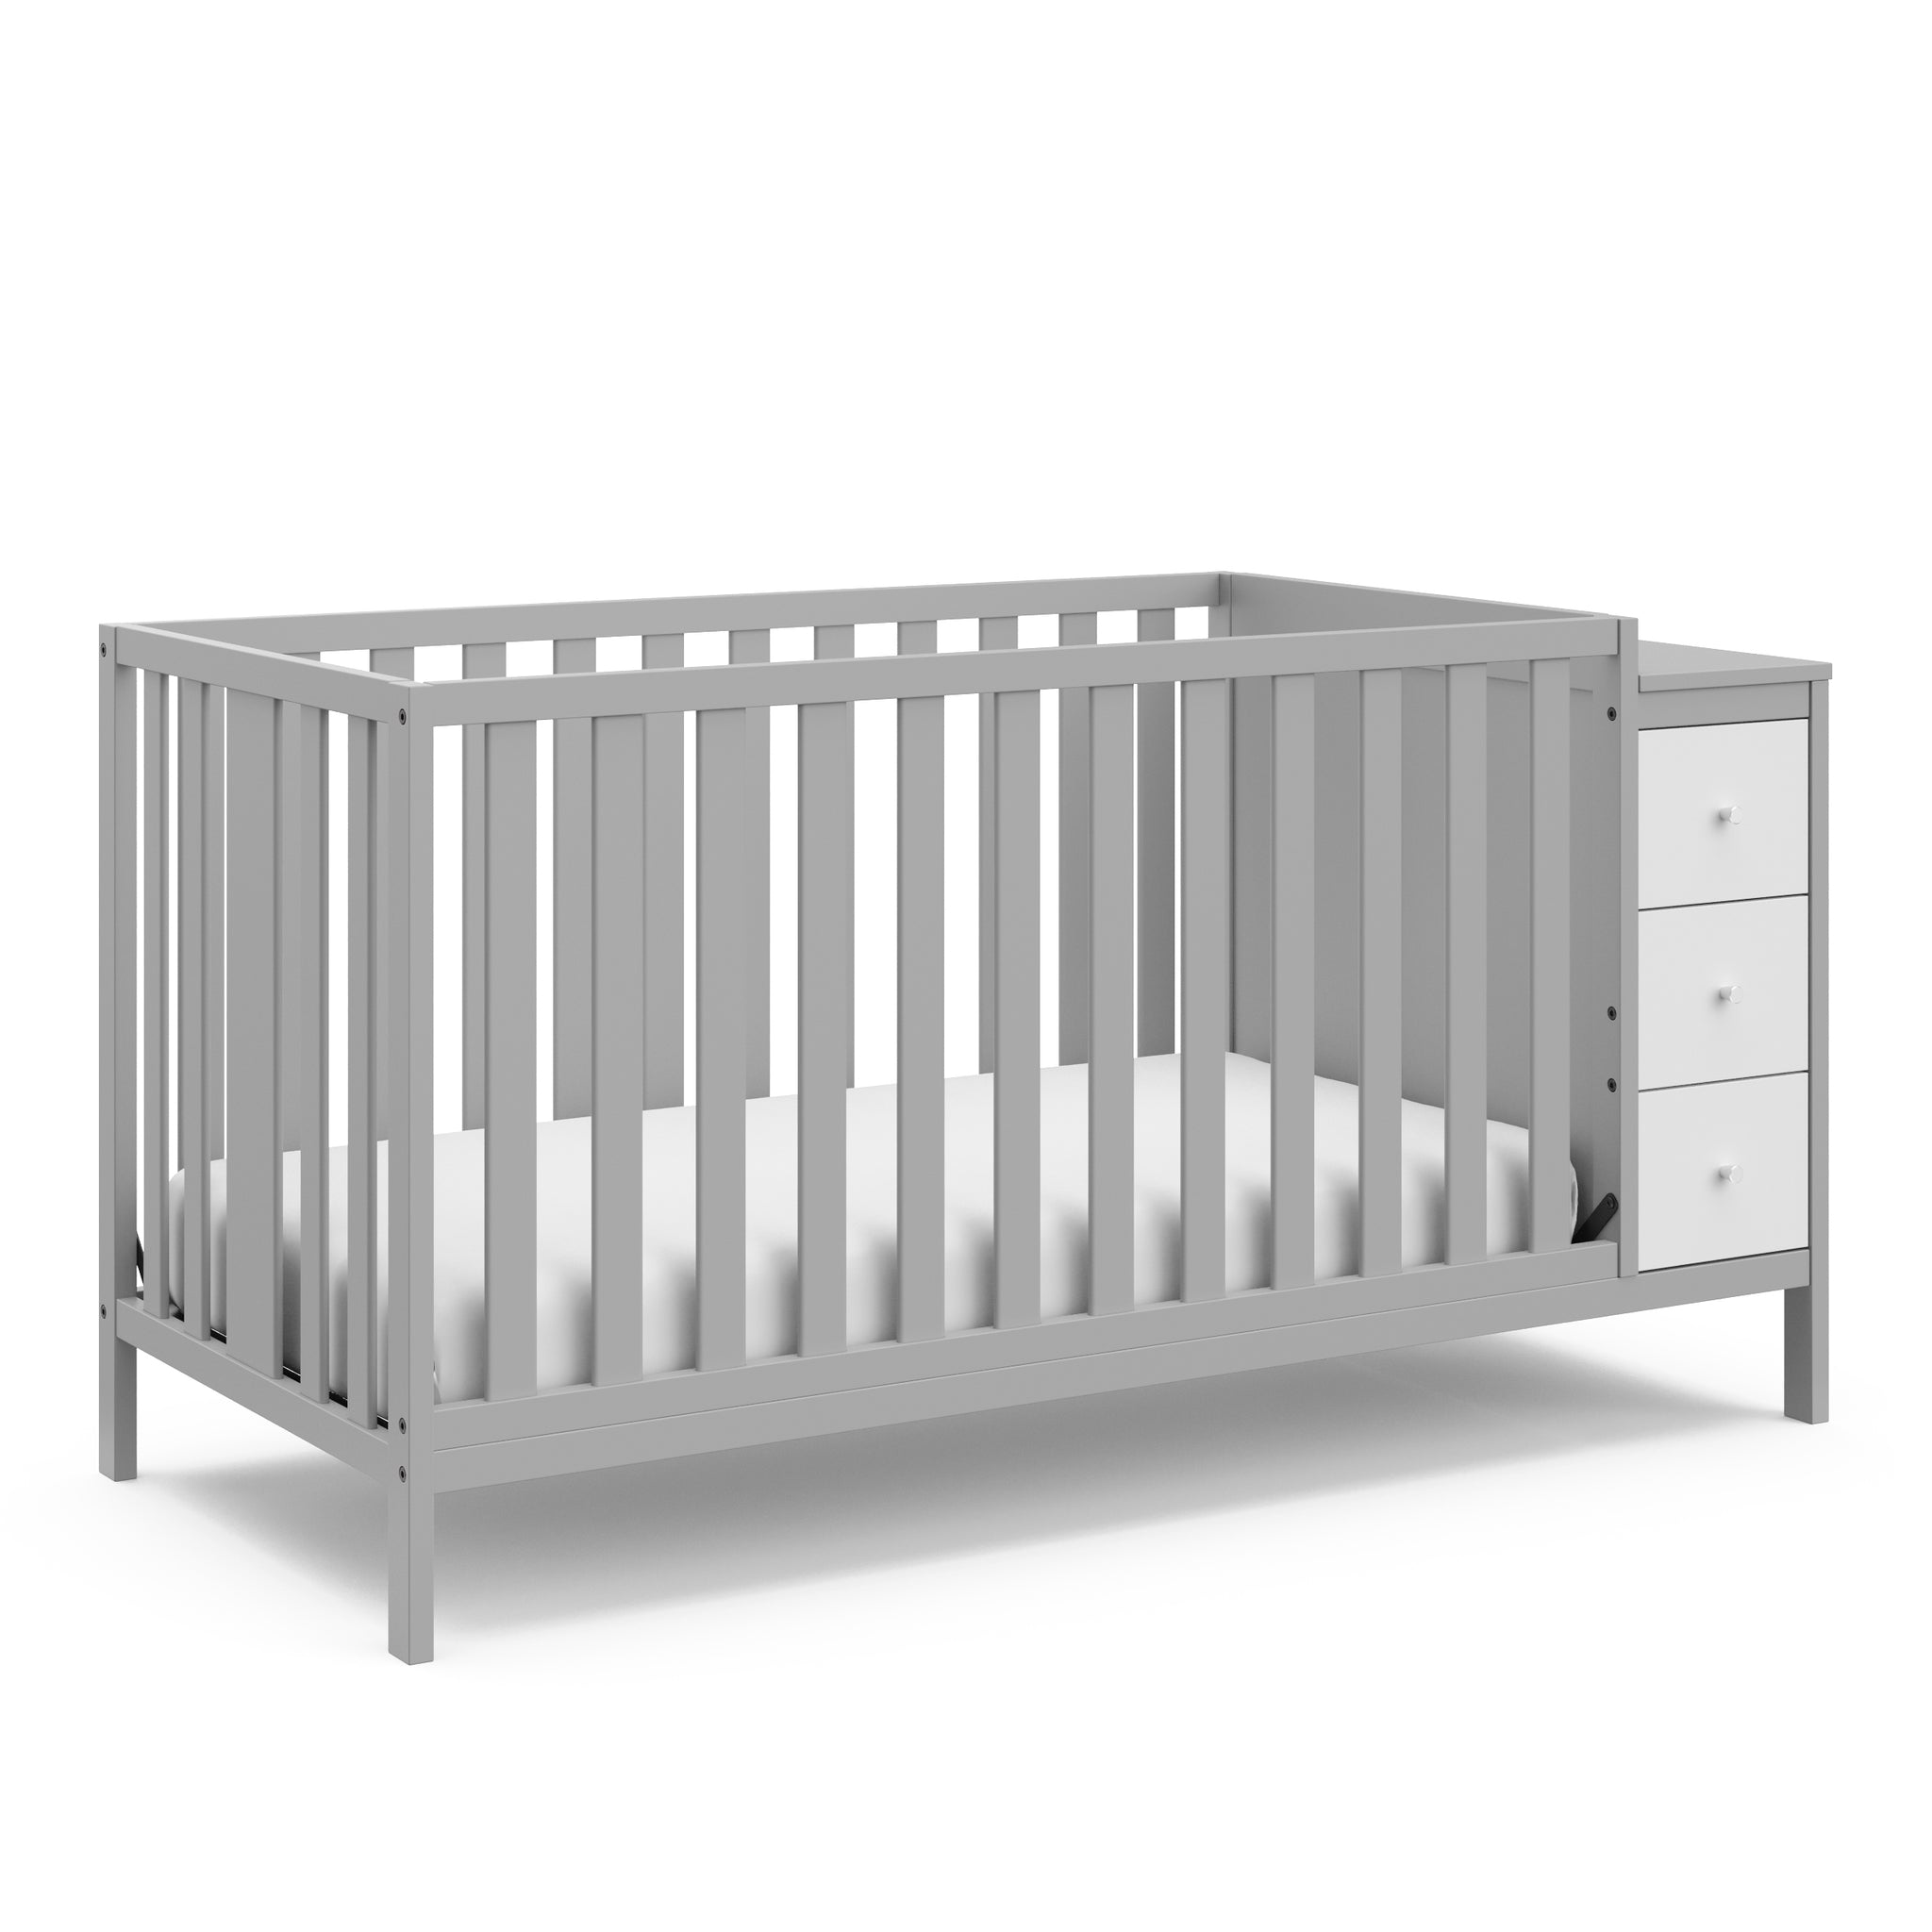 pebble gray and white crib with storage angled